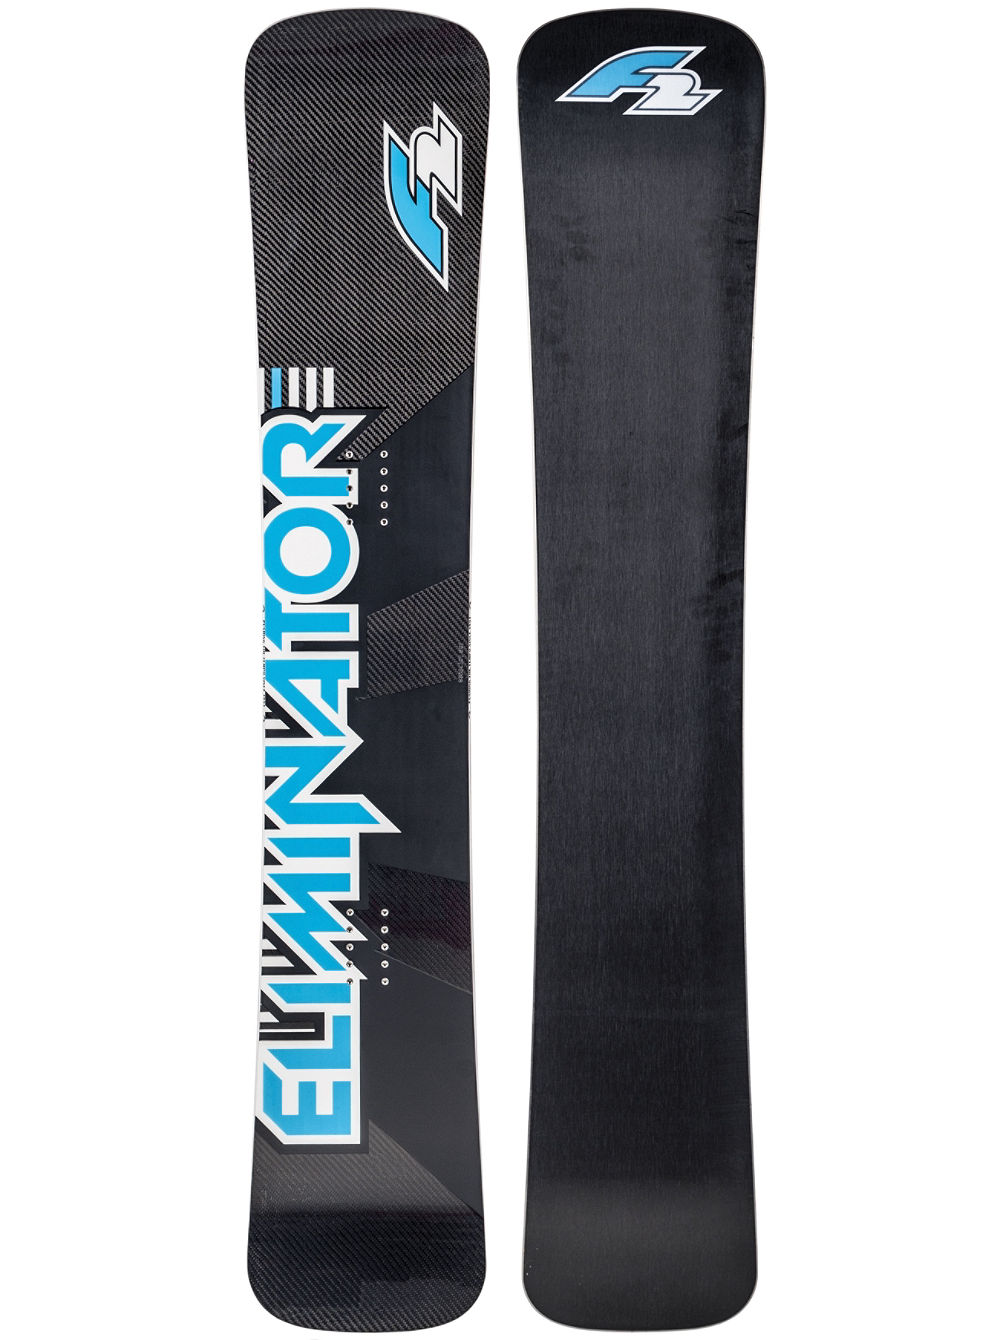 Eliminator WC Carbon 158 Alpin Snowboard